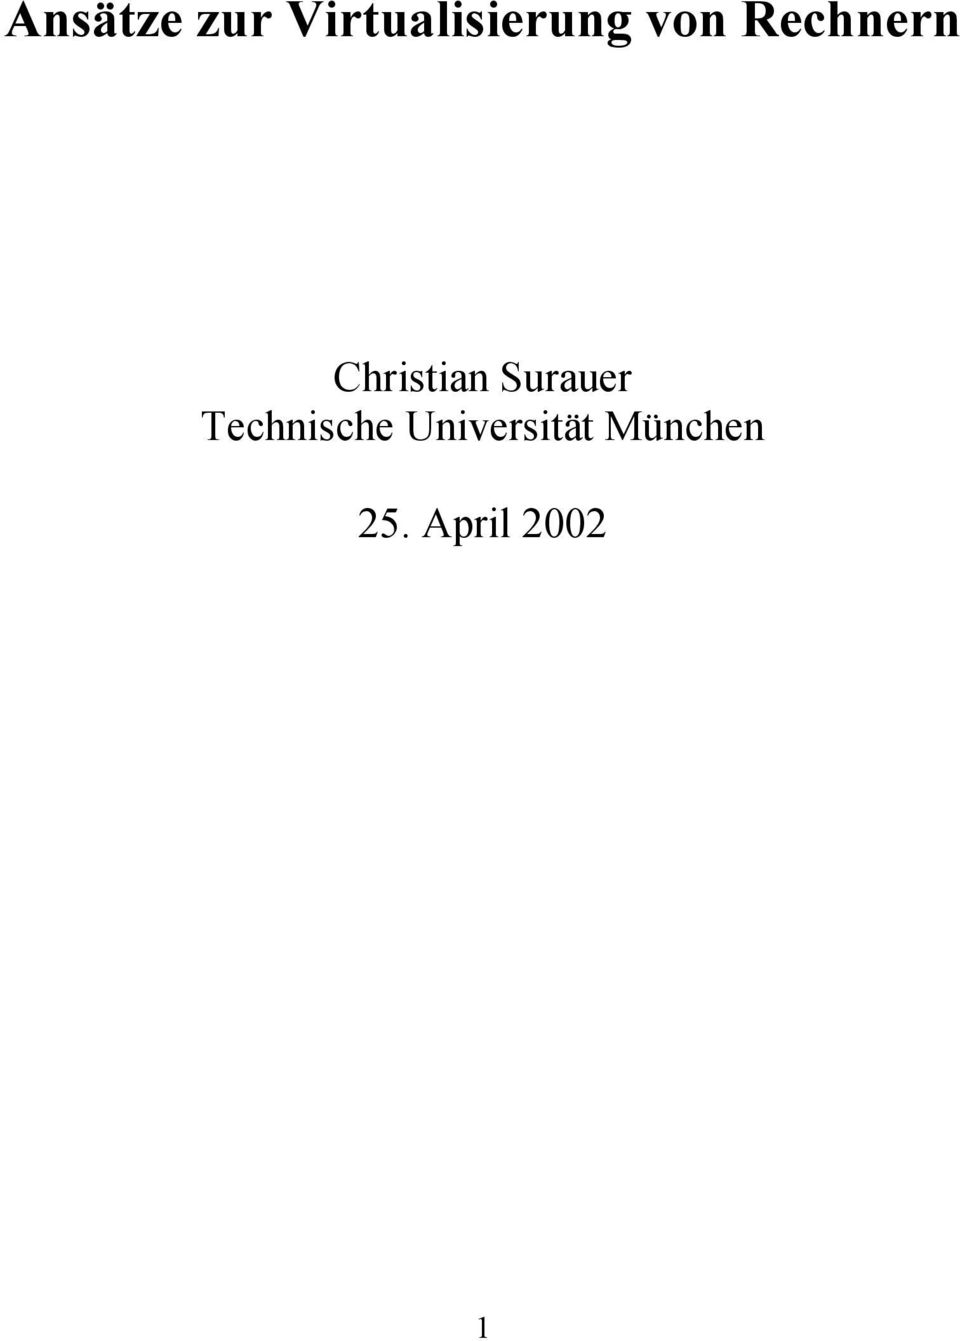 Rechnern Christian Surauer